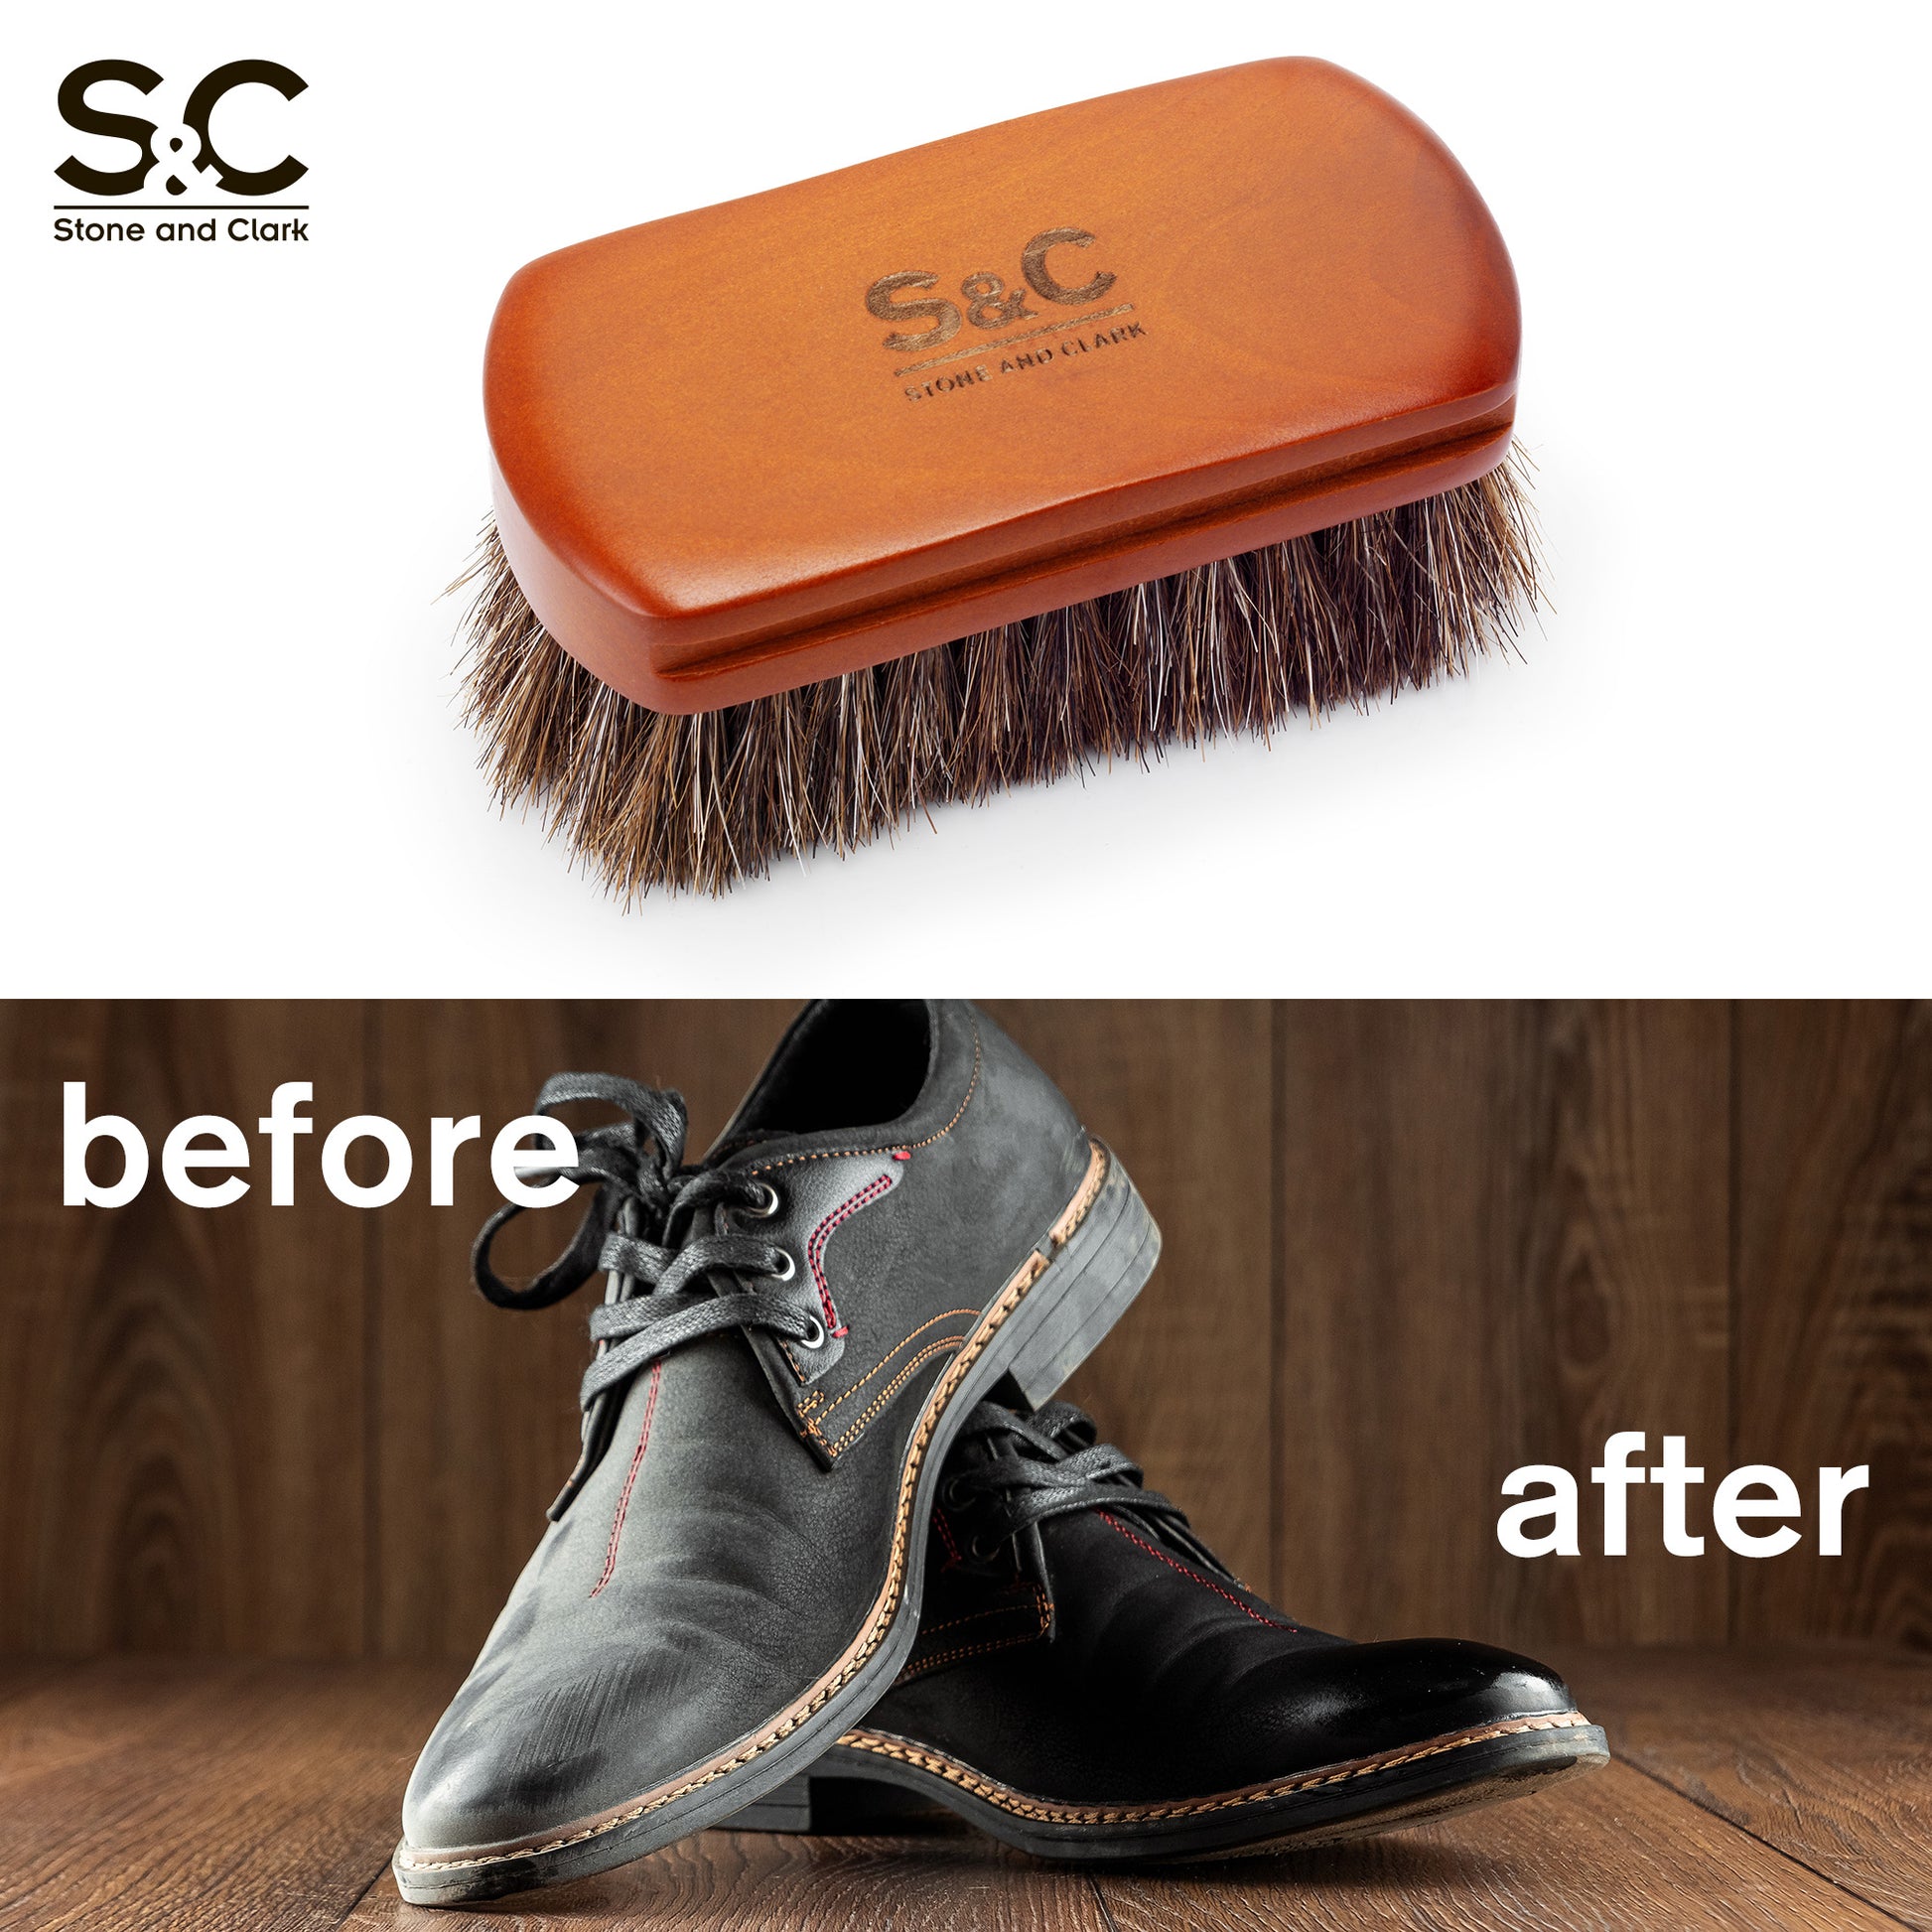 Mini 4 Shoe Brush - Portable Horse Hair Boot Brush w/Natural Wood Handle -  Soft Bristle Shoe Shine Brush for Cleaning, Buffing & Polishing Leather